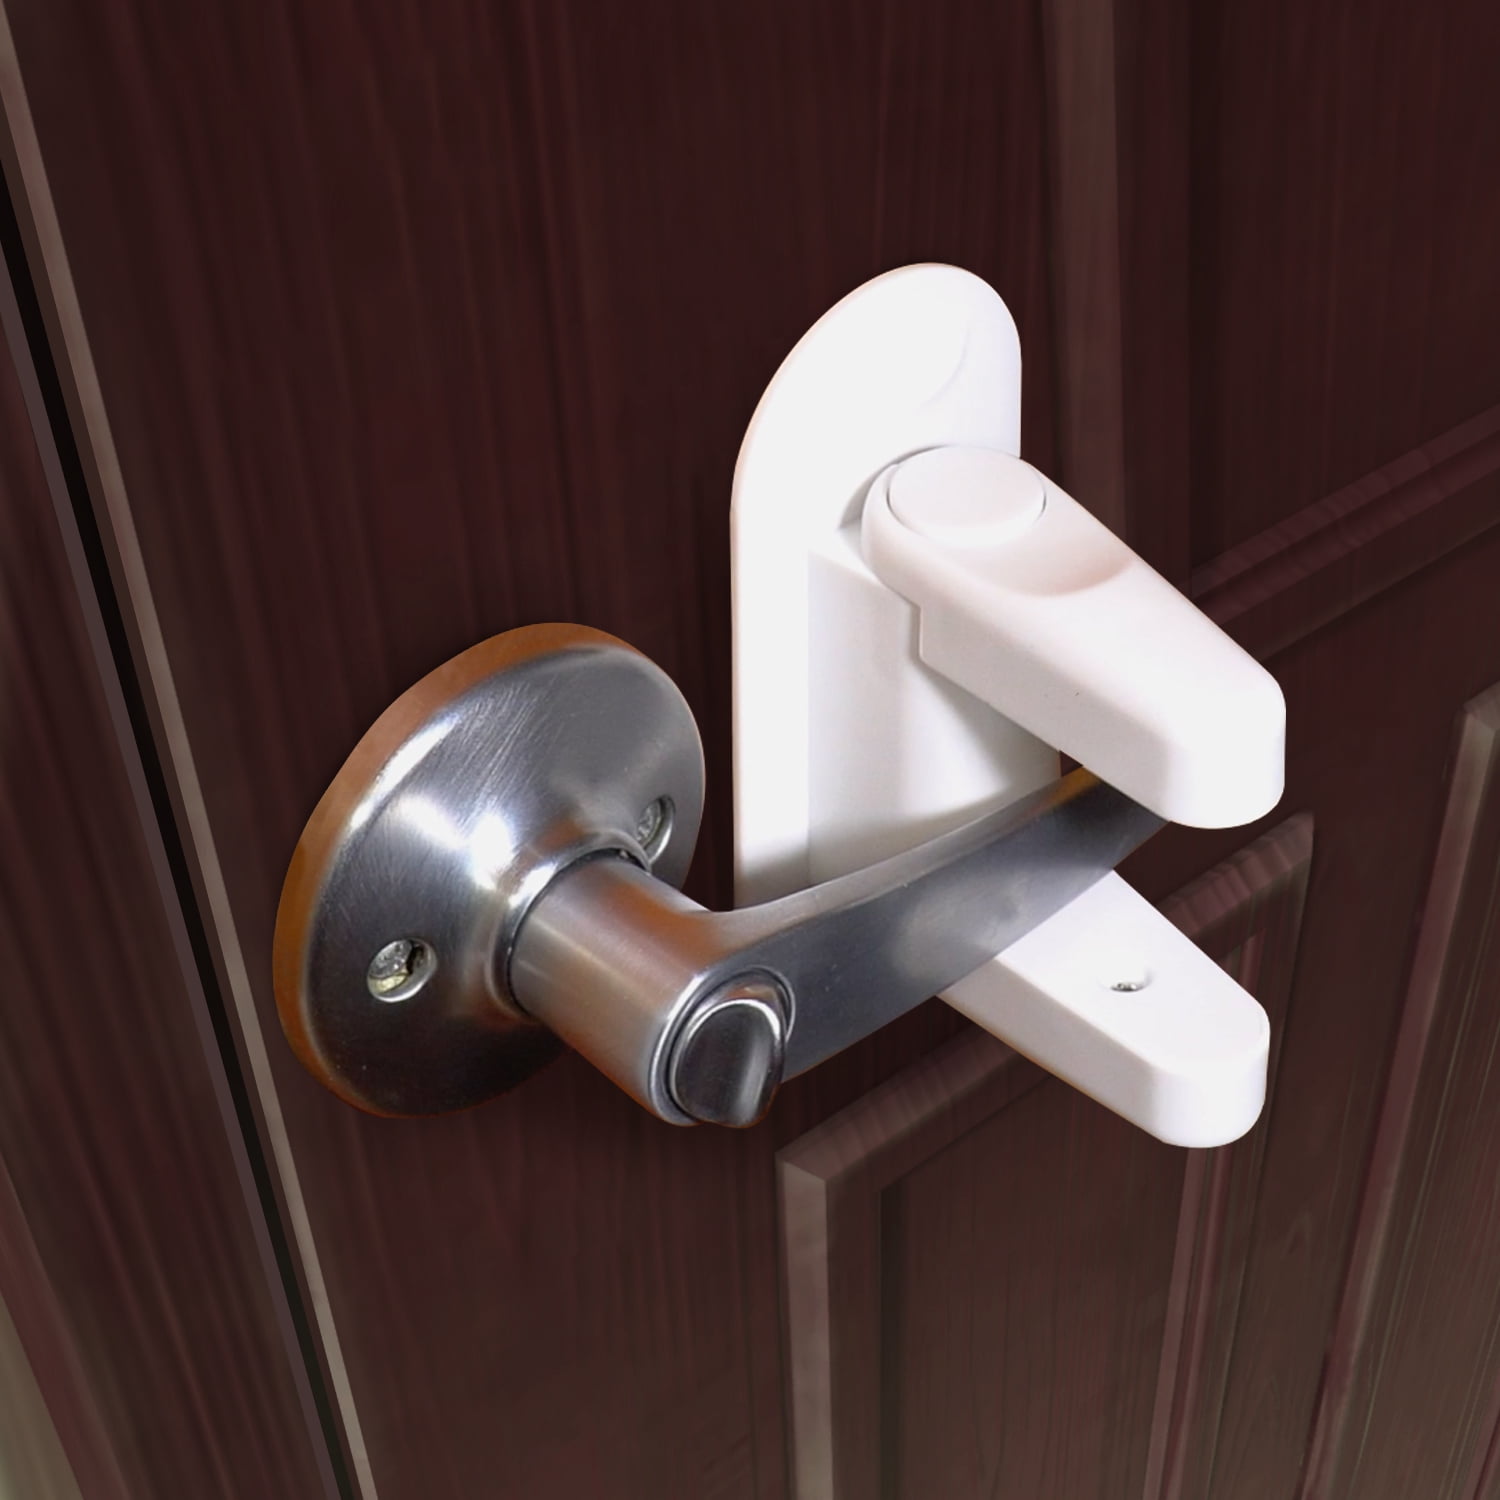 Baby Door Lever Lock Child Toddler Proof Safety Doors Handles 3M-Adhesive 4 Pack 